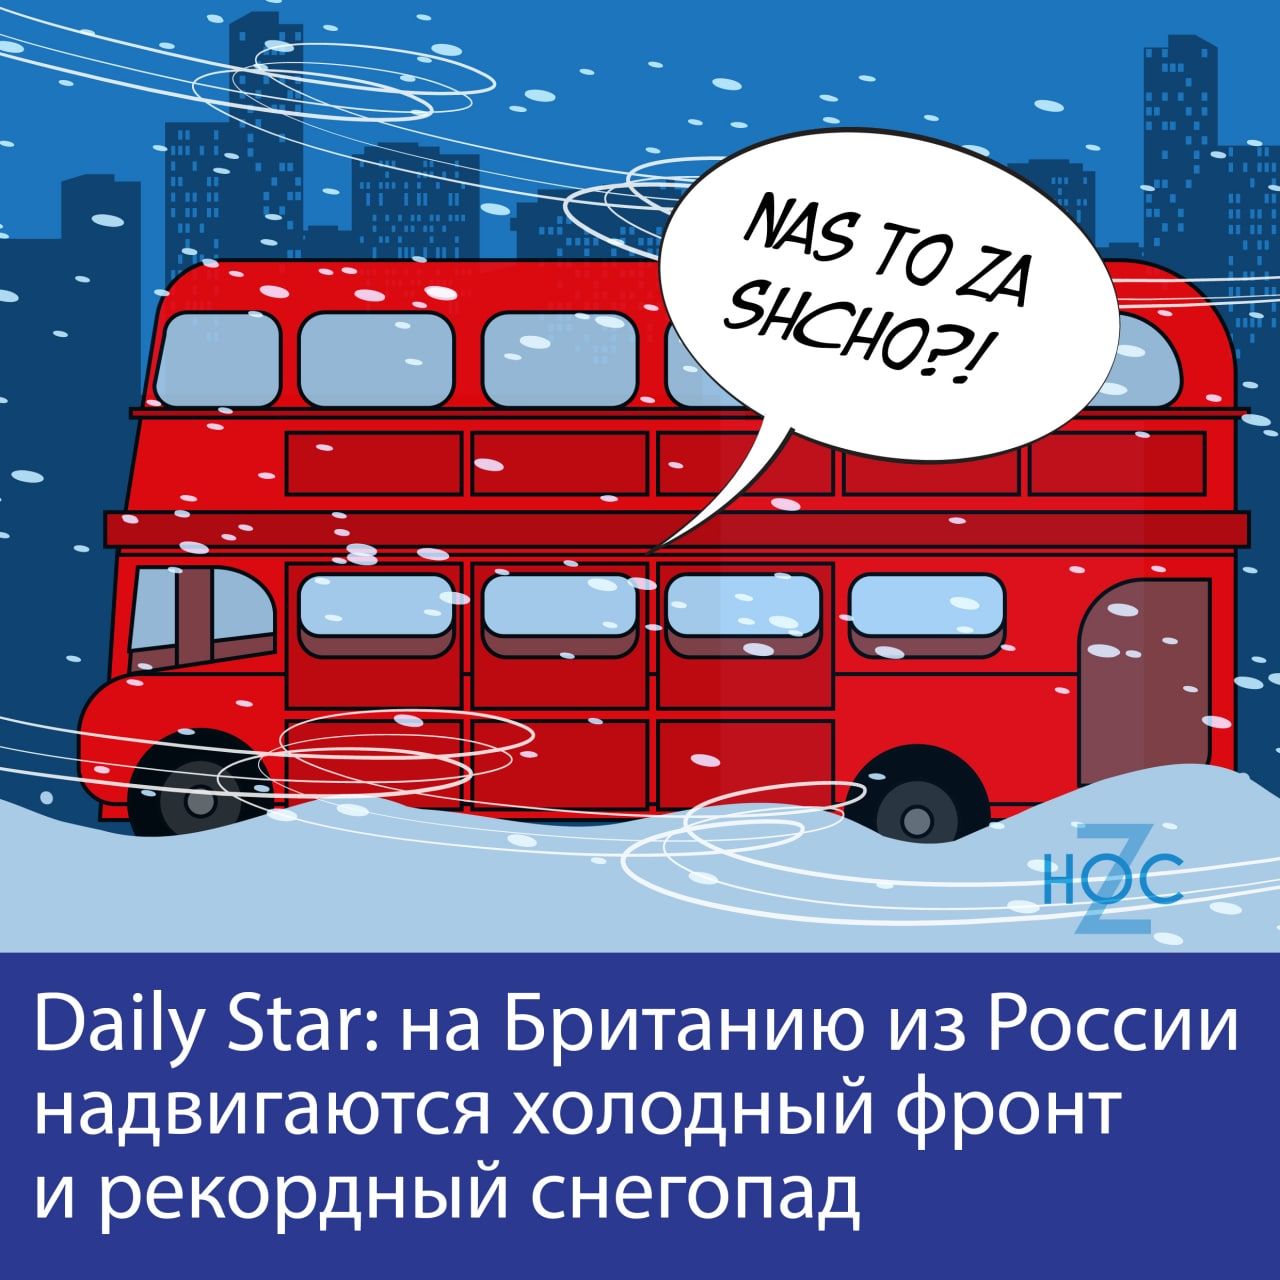 Ваііу Згаг на Британию из России надвигаются холодный фронт и рекордный снегопад